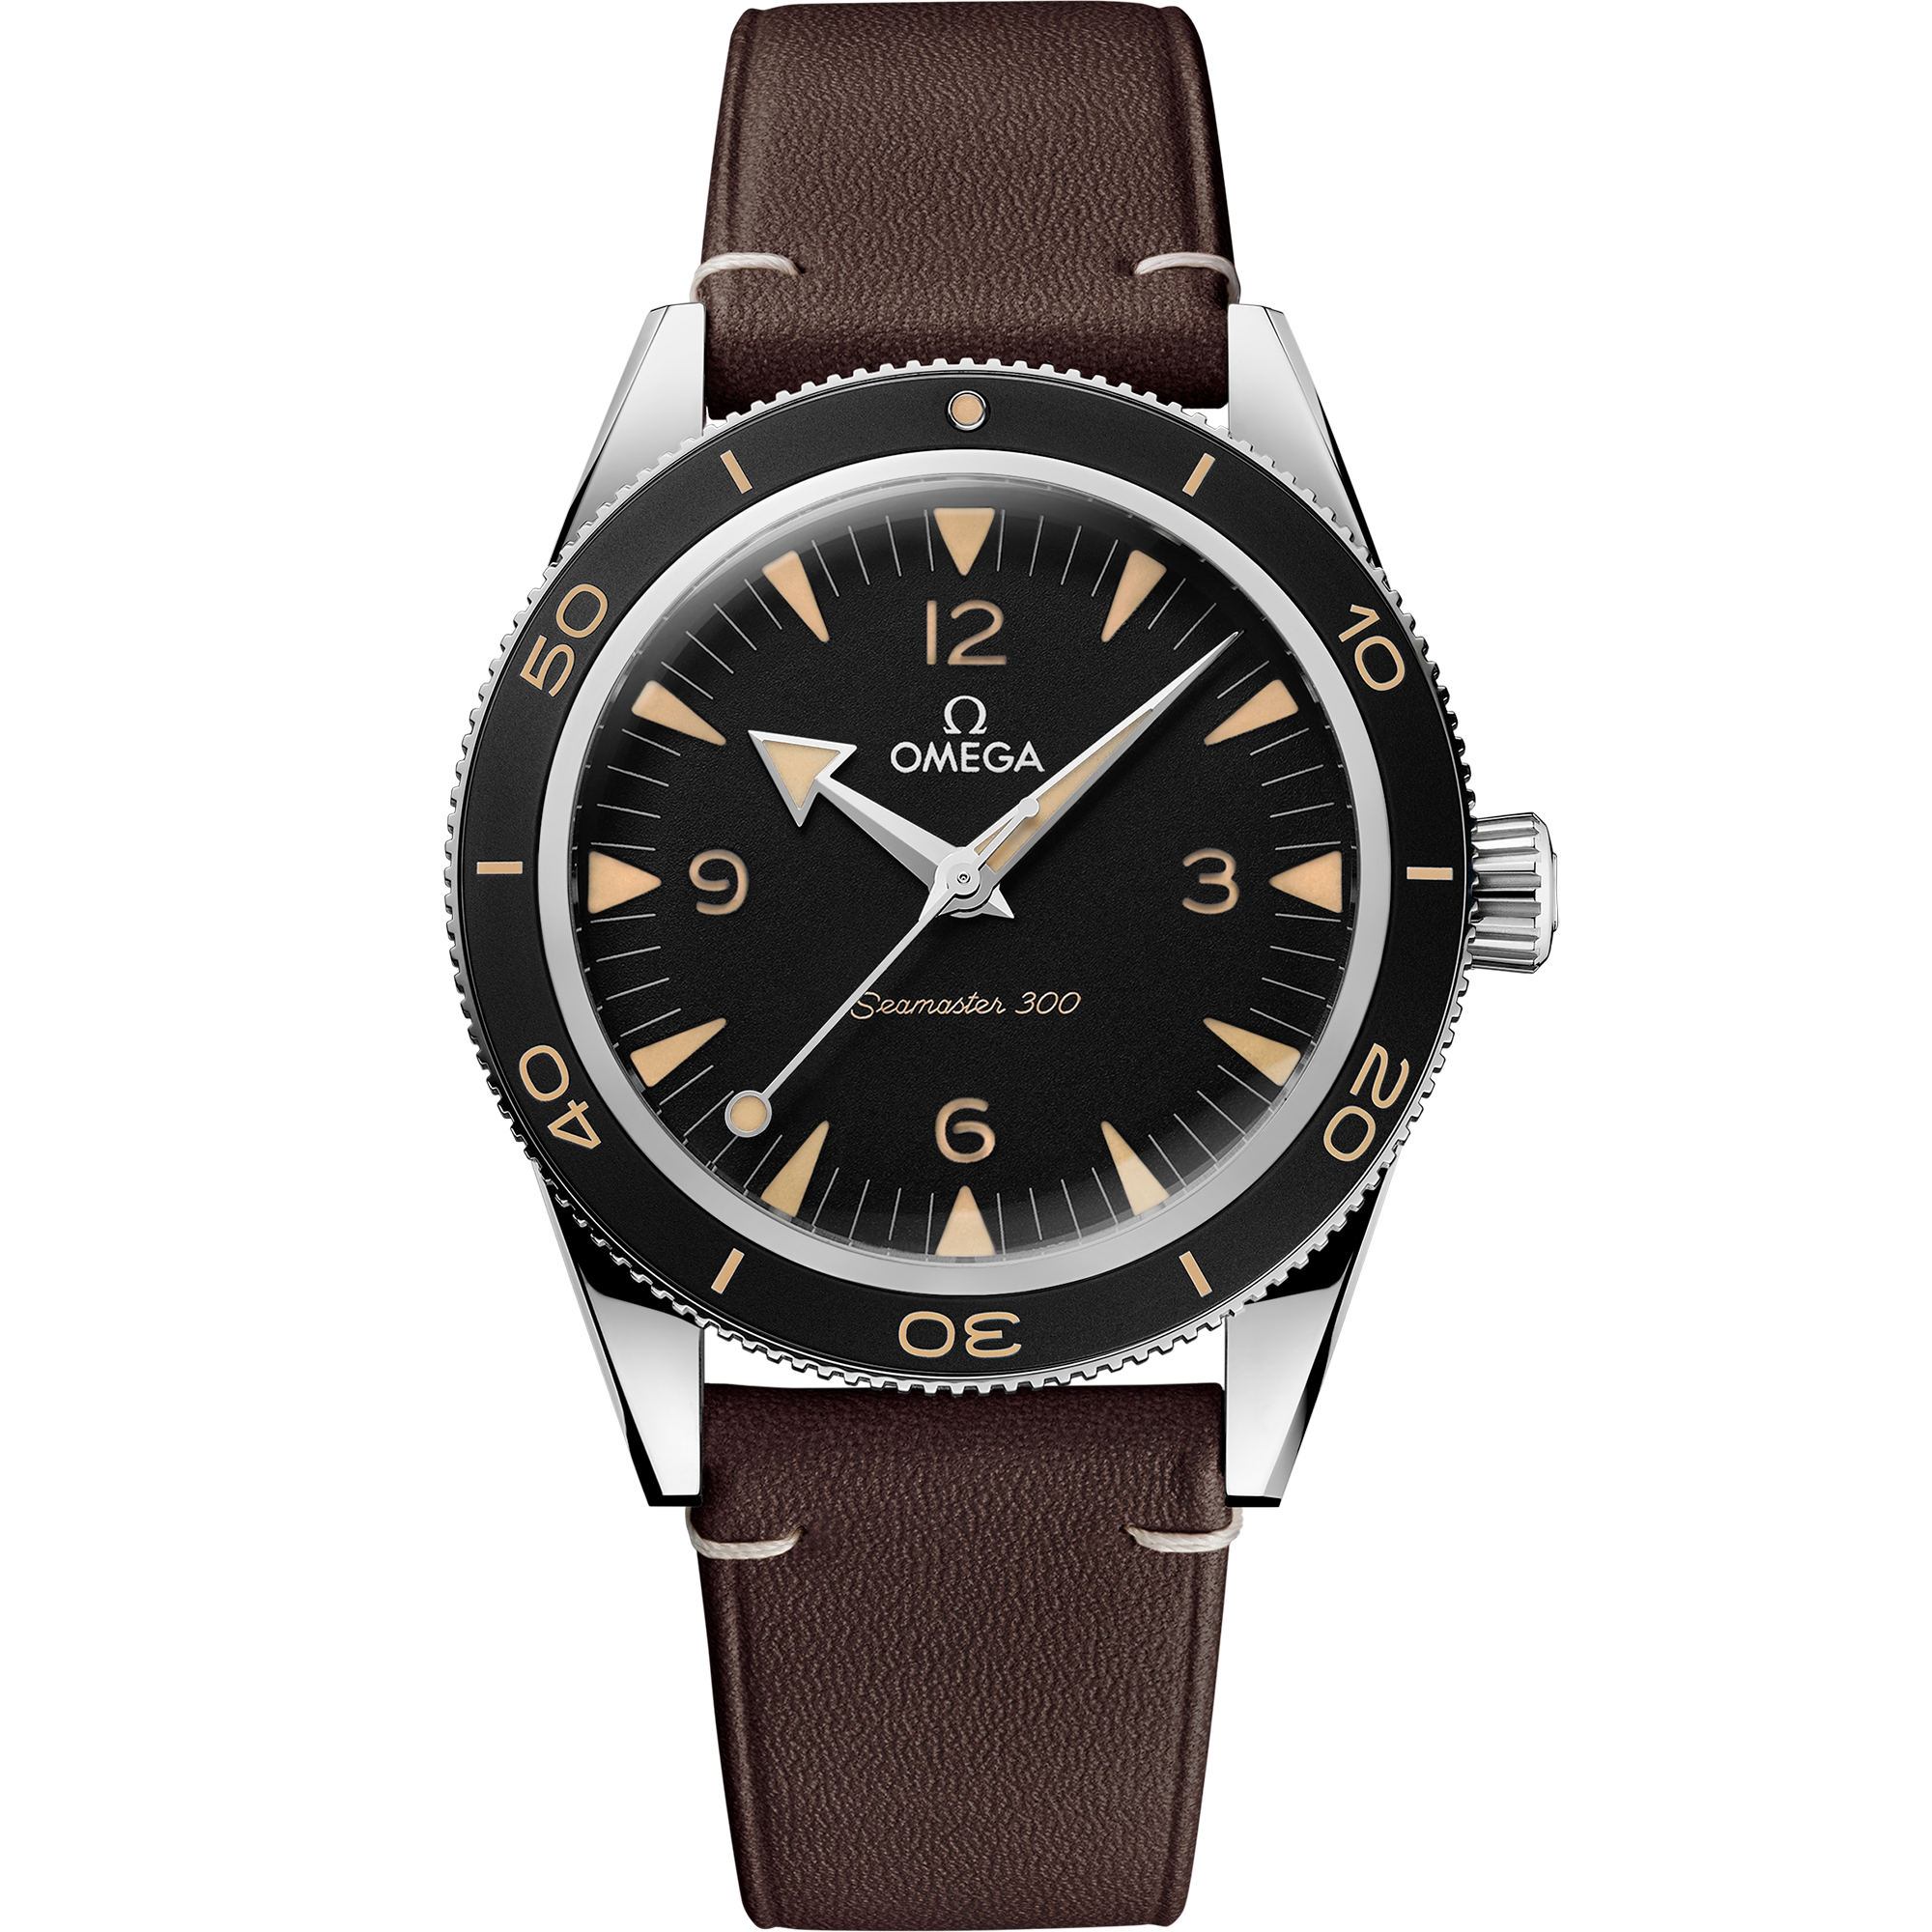 Seamaster 300 Seamaster Steel Chronometer Watch 234.32.41.21.01.001